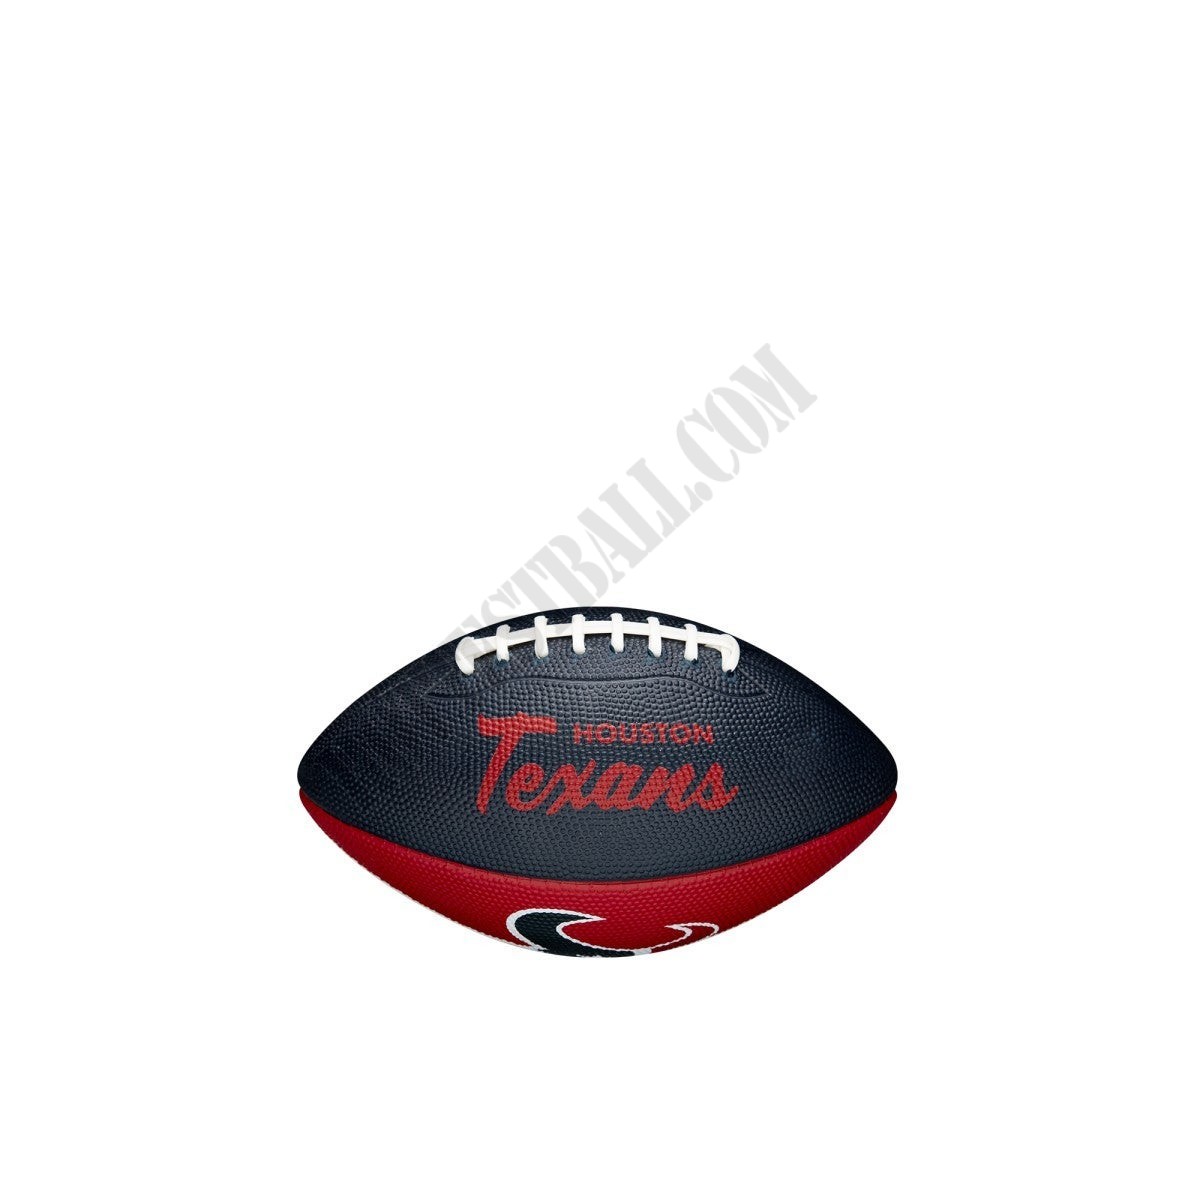 NFL Retro Mini Football - Houston Texans ● Wilson Promotions - NFL Retro Mini Football - Houston Texans ● Wilson Promotions